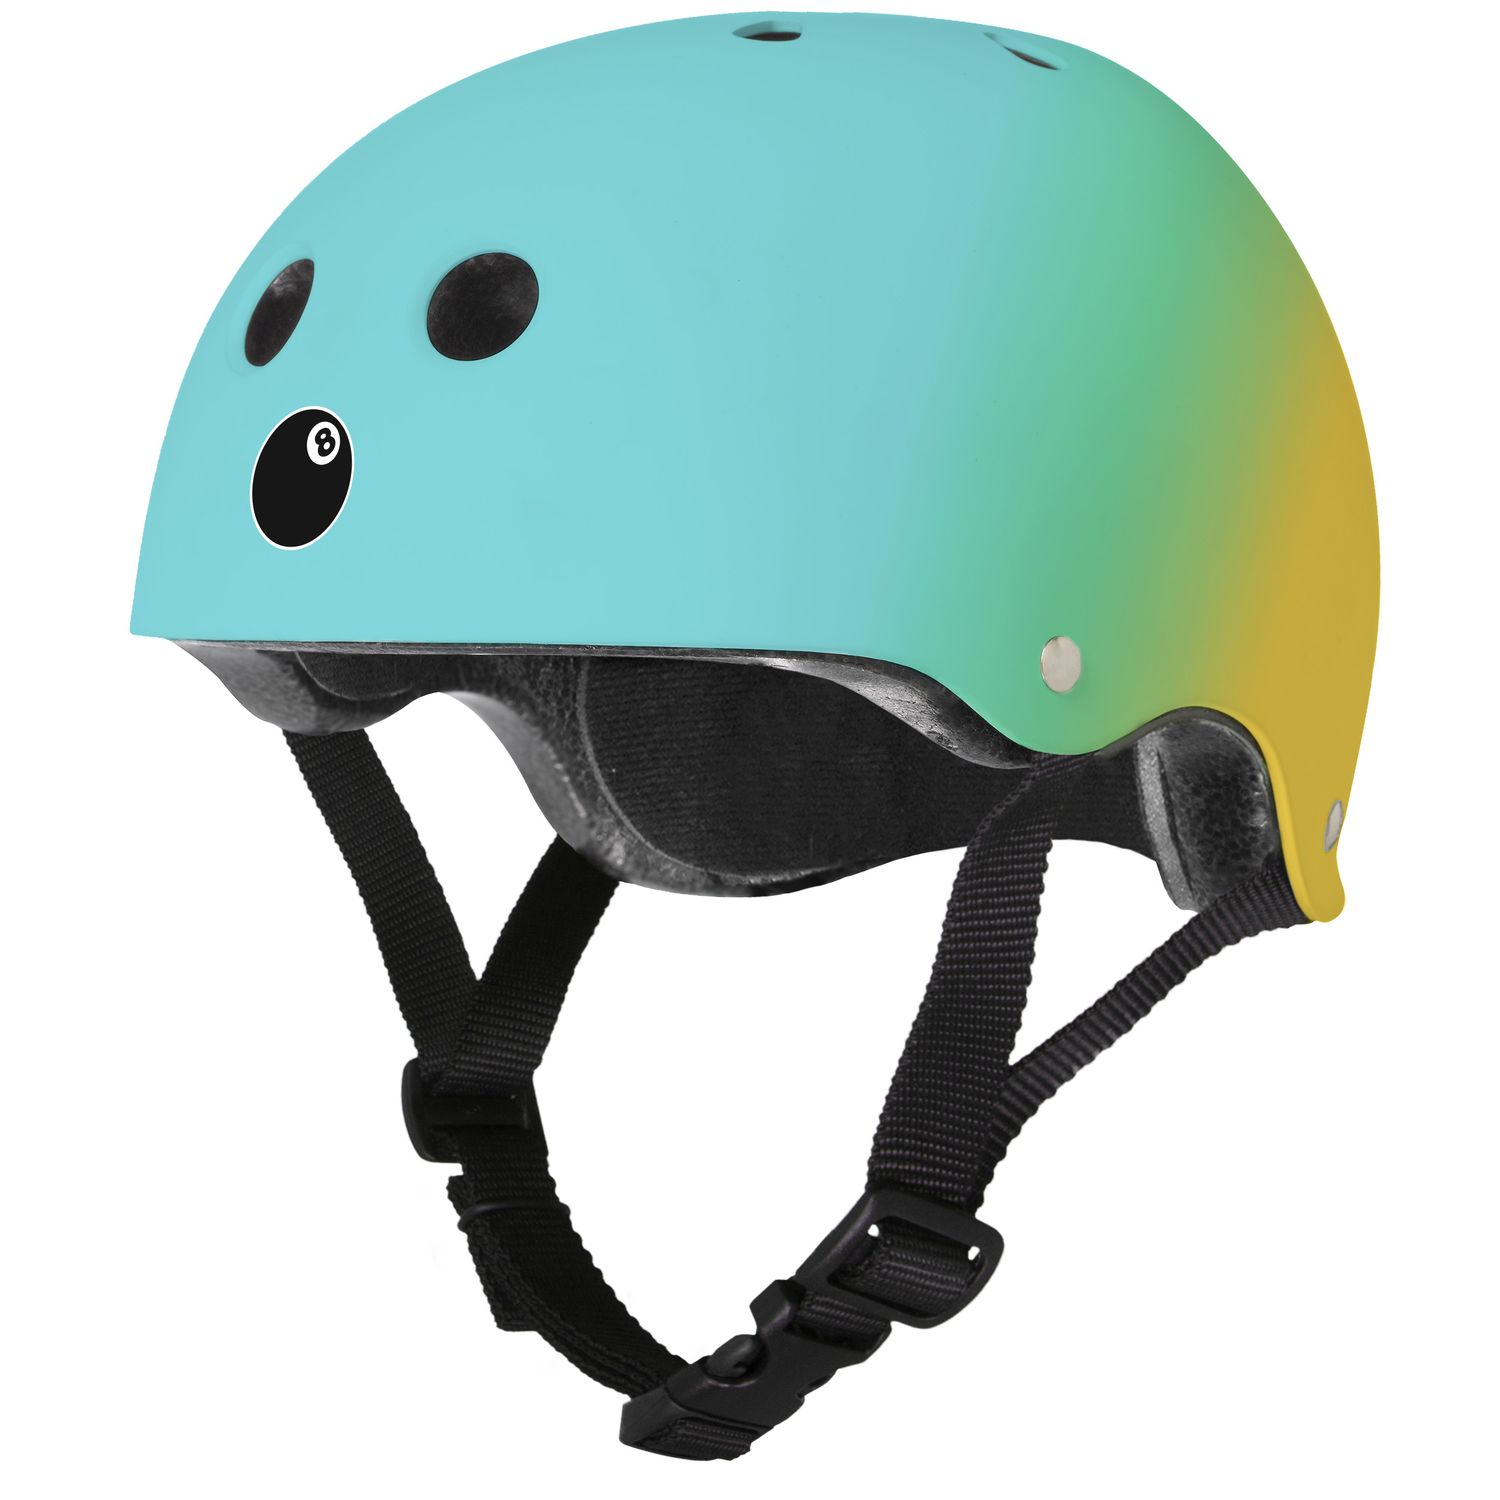 Шлем защитный Eight Ball Coral Reef (8+) - голубой, зелёный, жёлтый